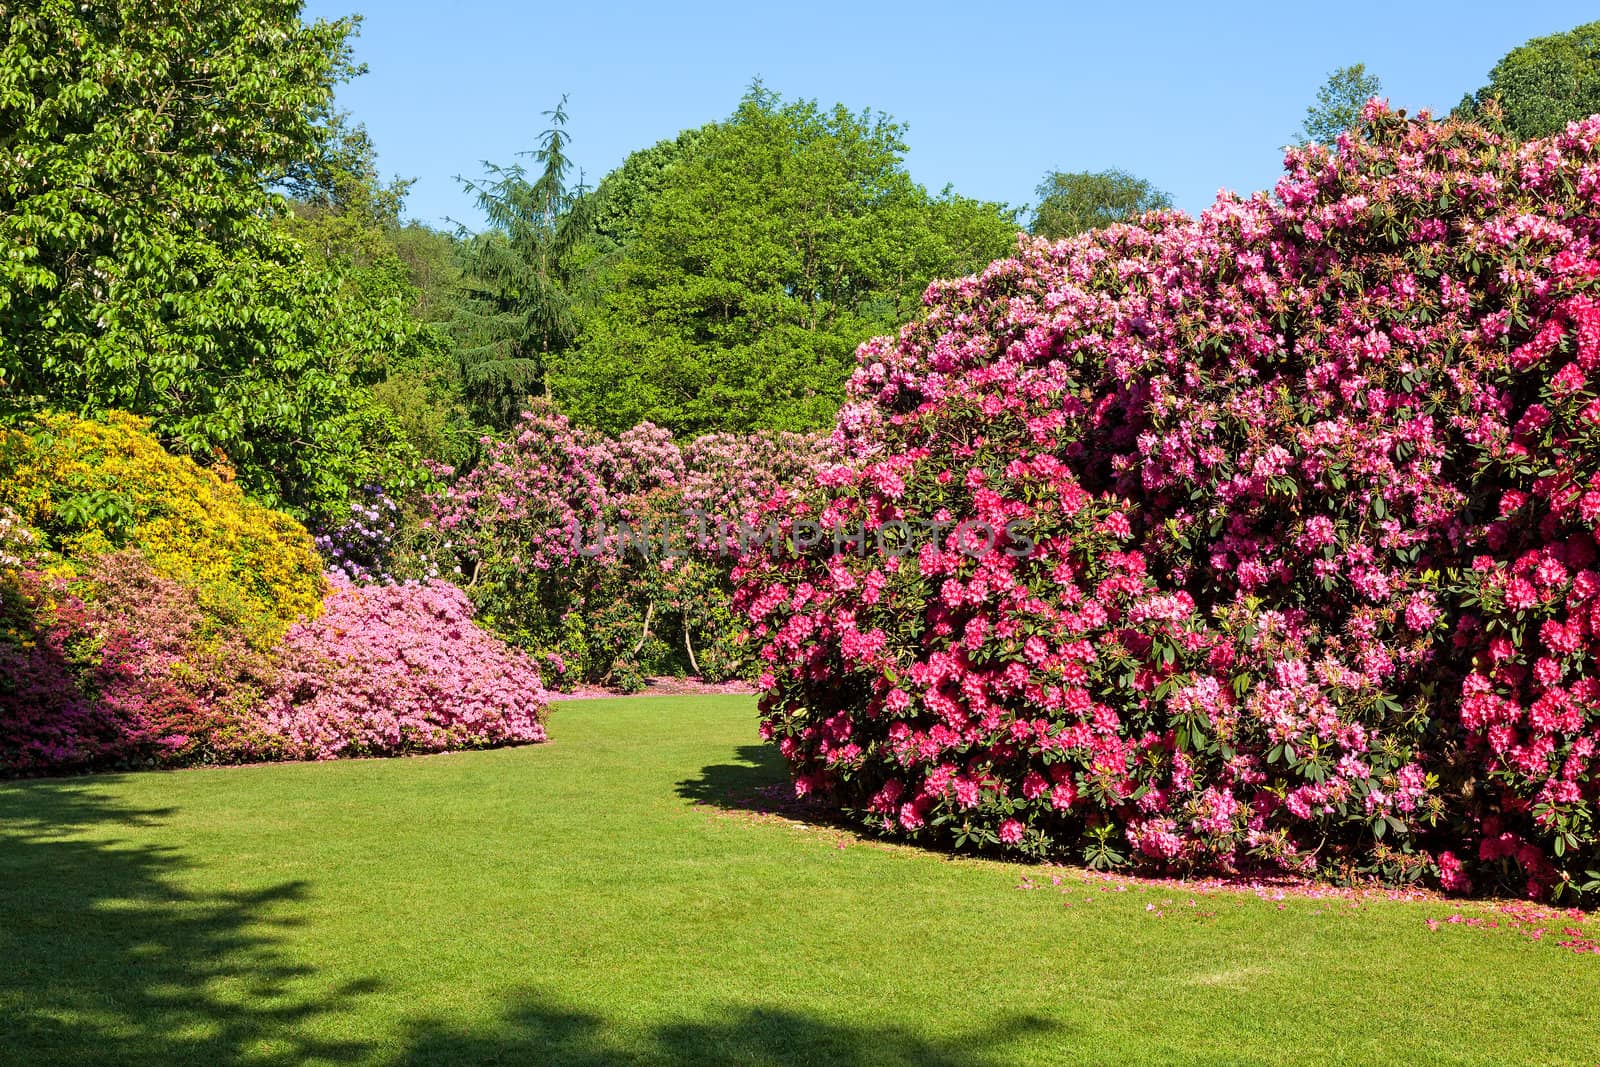 Rhododendron and Azalea Bushes in Beautiful Summer Garden by scheriton